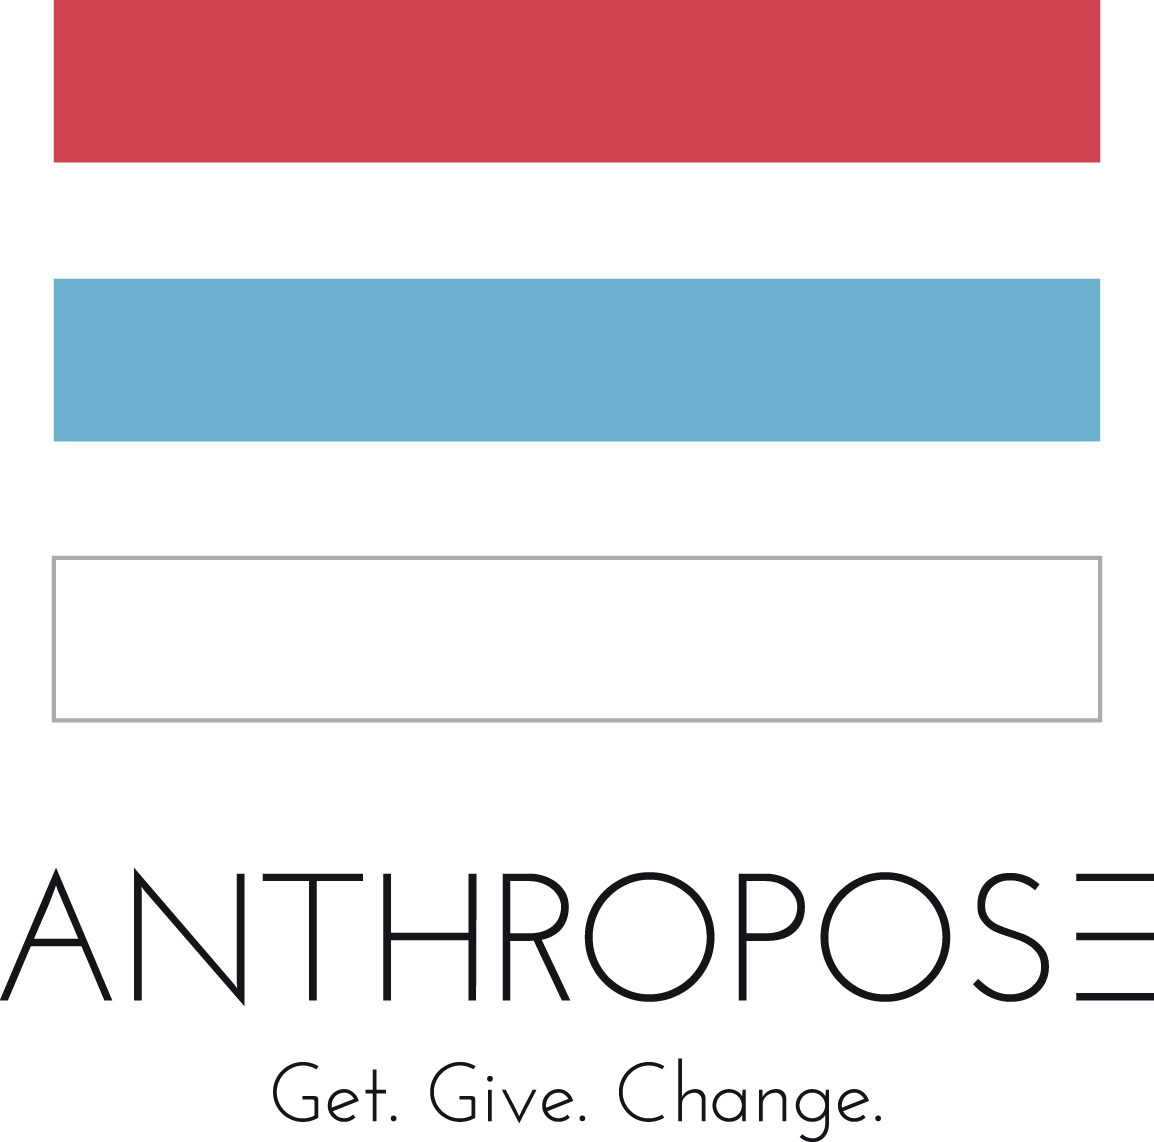 Anthropose | Get. Give. Change.